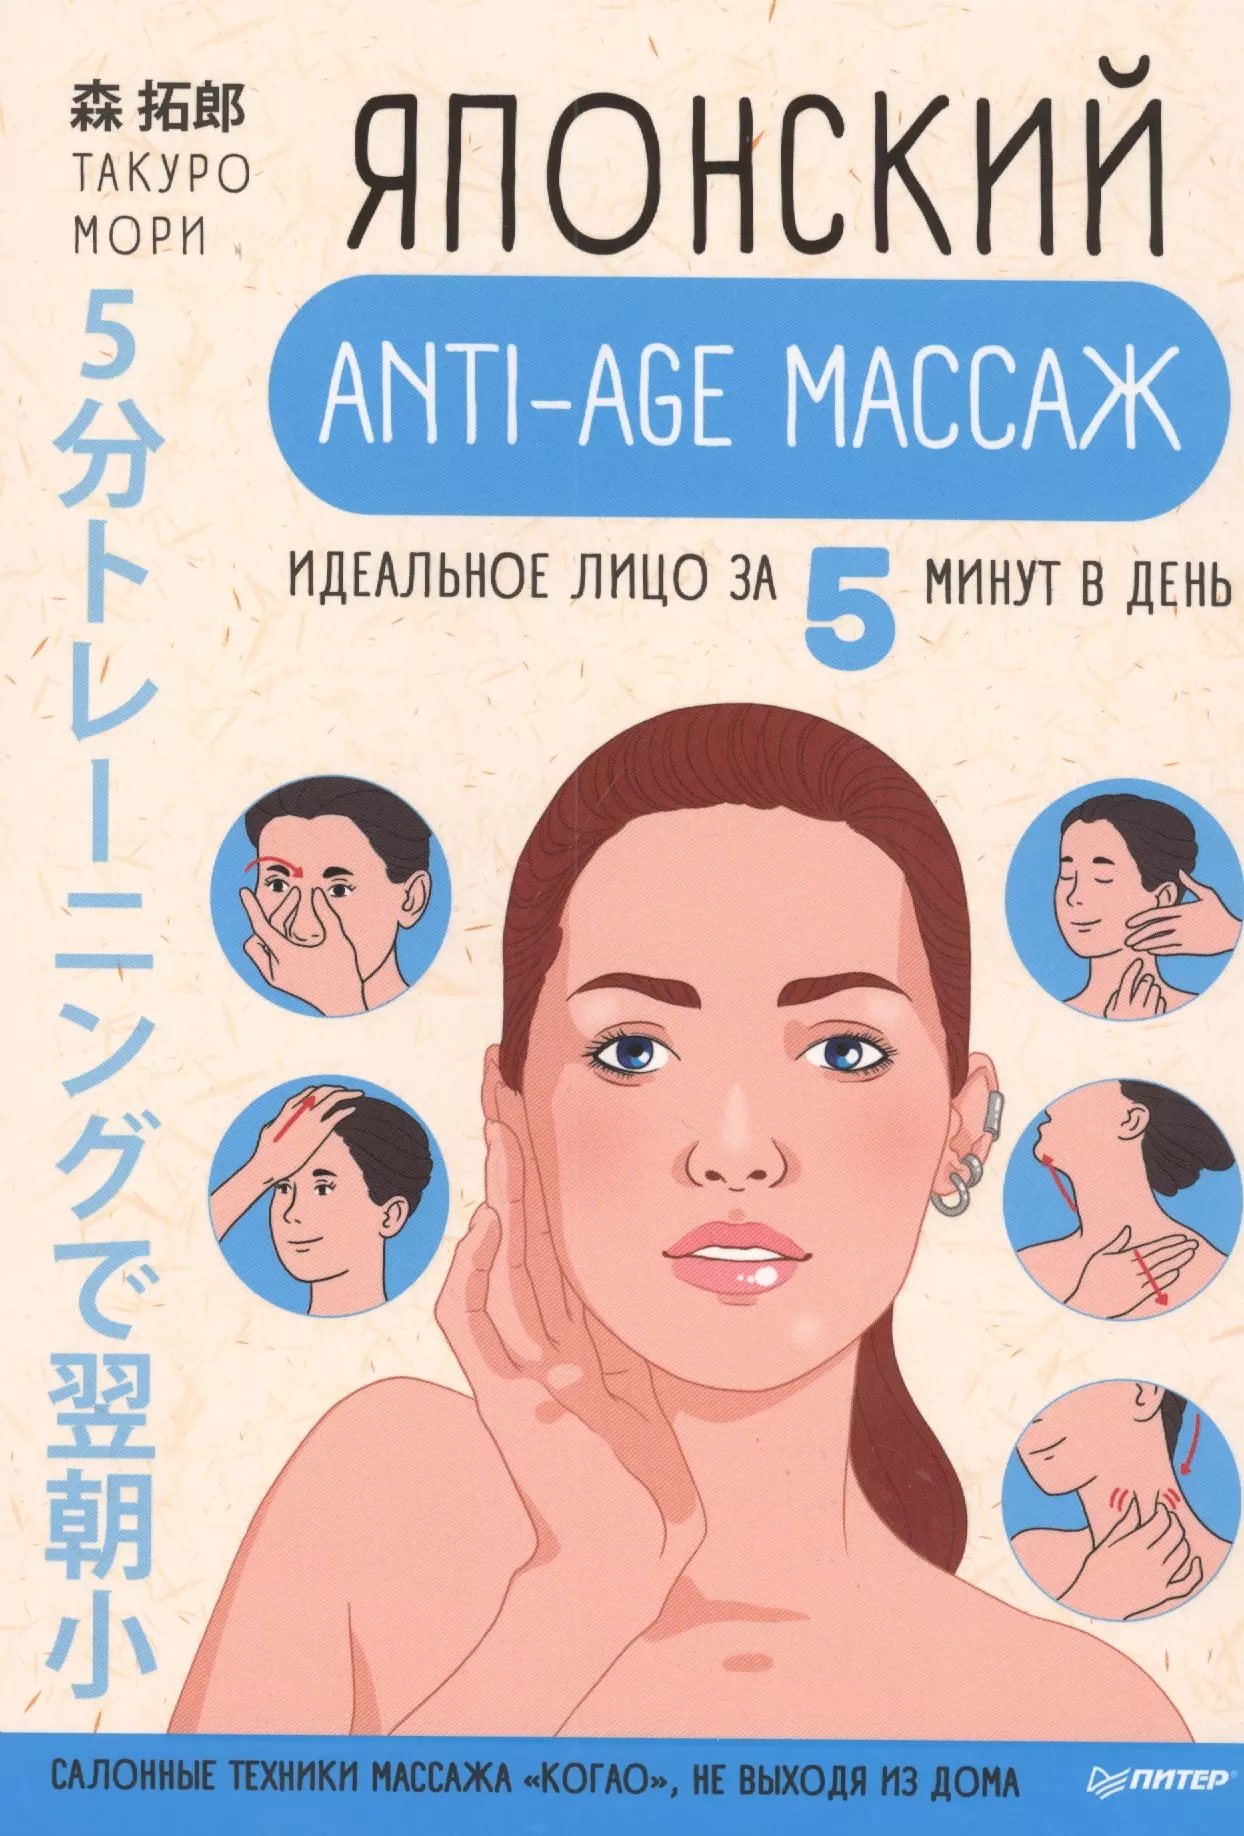 Мори Такуро - Японский anti-age массаж: идеальное лицо за 5 минут в день